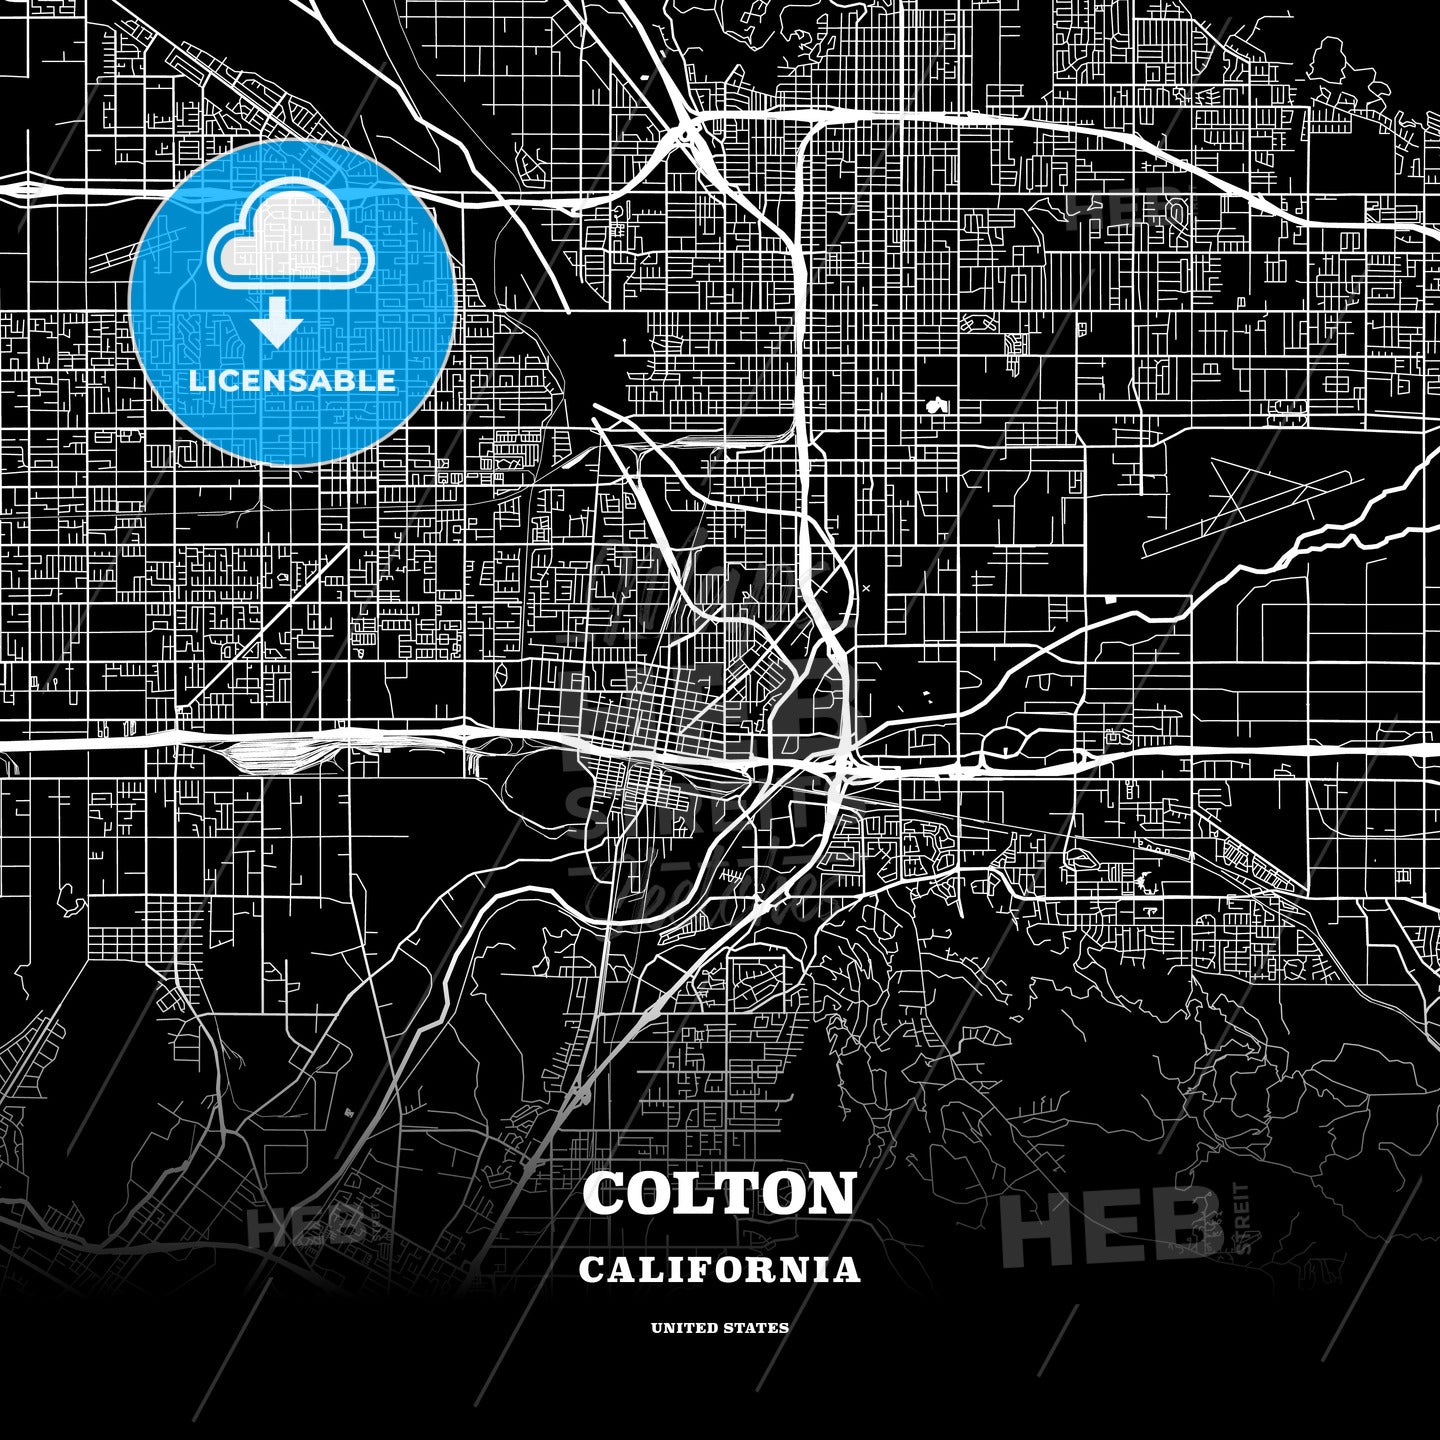 Colton, California, USA map